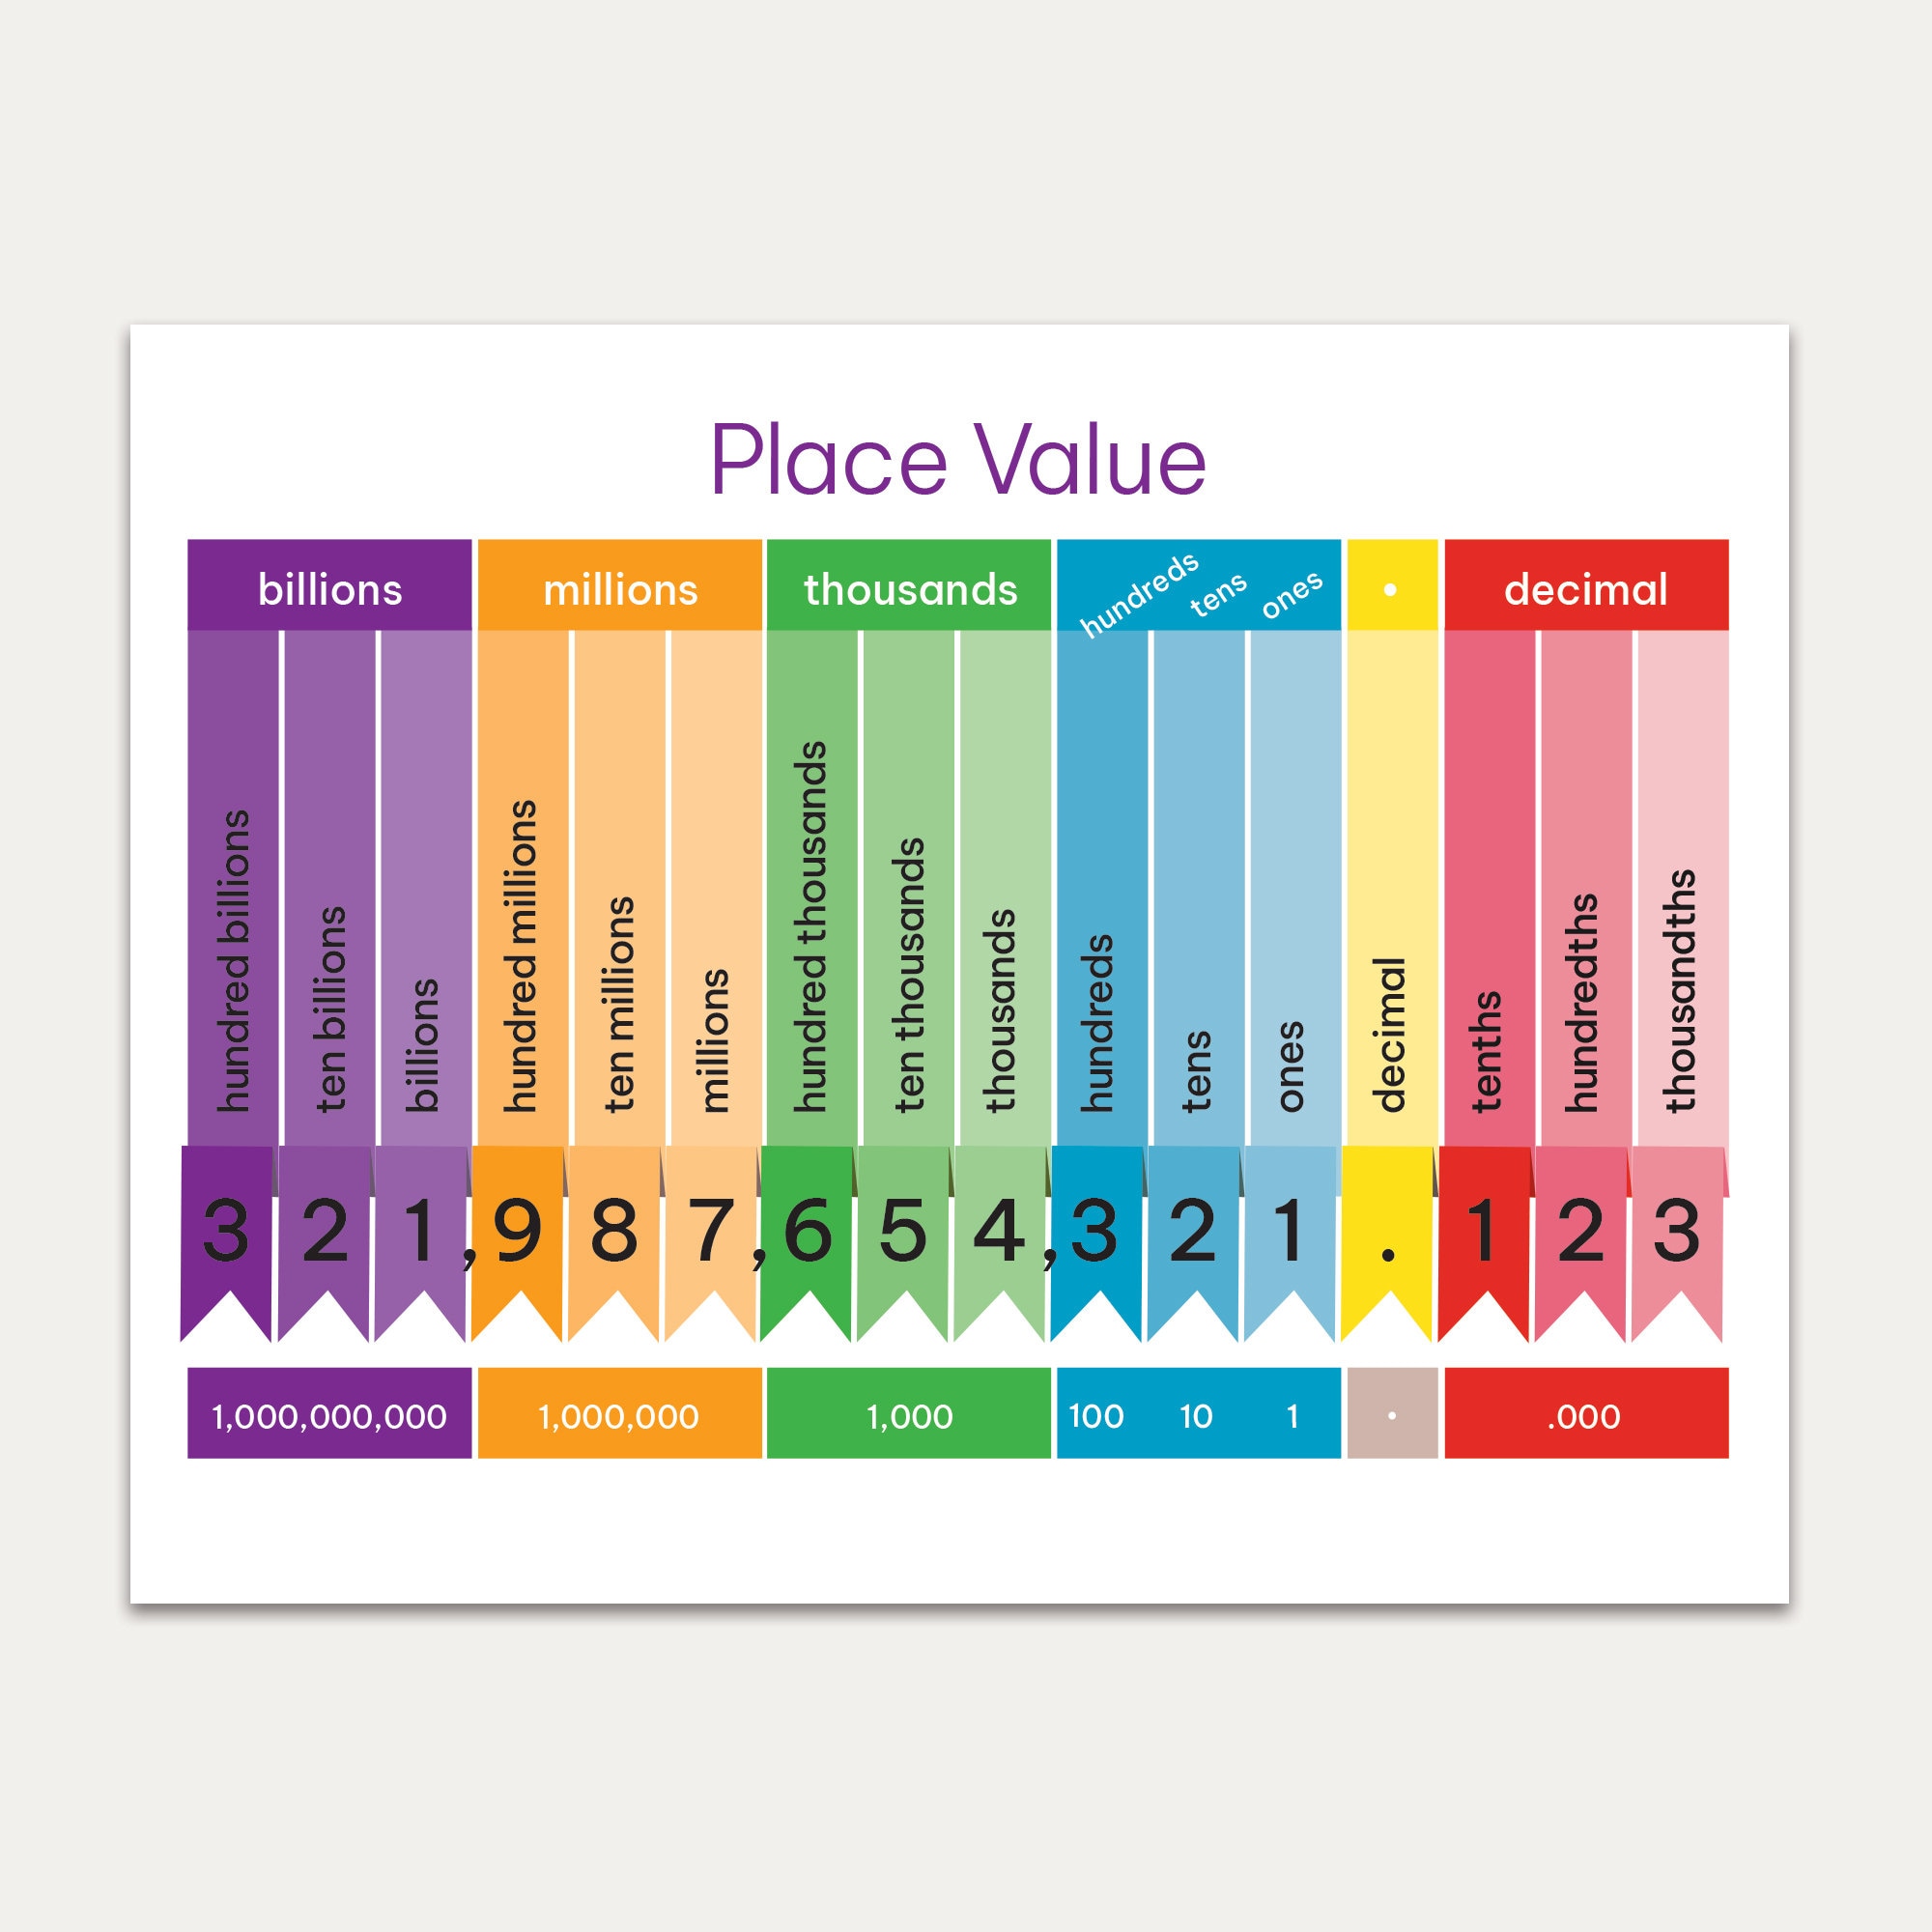 place-value-chart-ubicaciondepersonas-cdmx-gob-mx